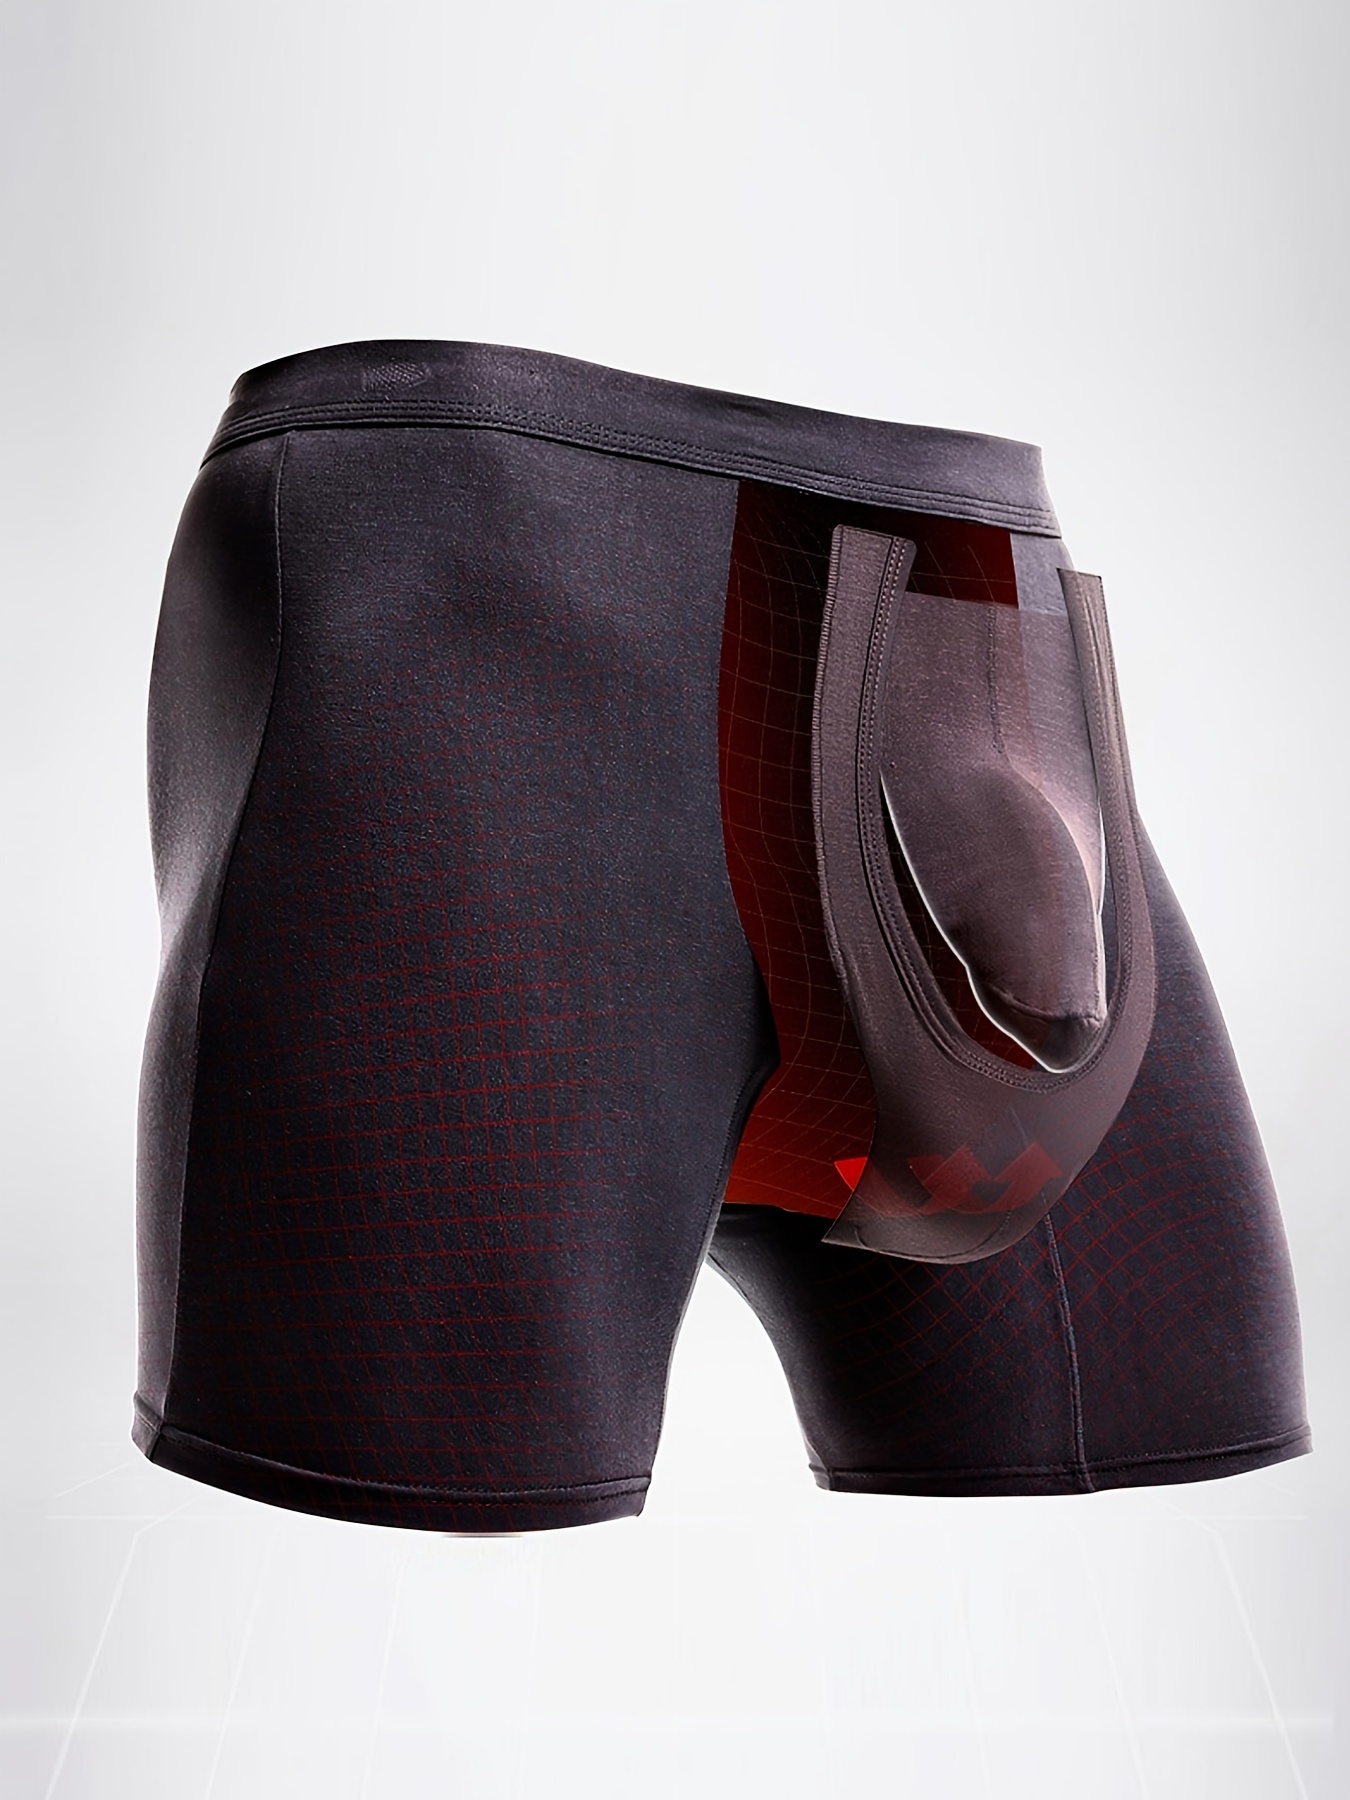 The Tool Kit // Ball Hammock® Pouch Underwear Briefs (XL